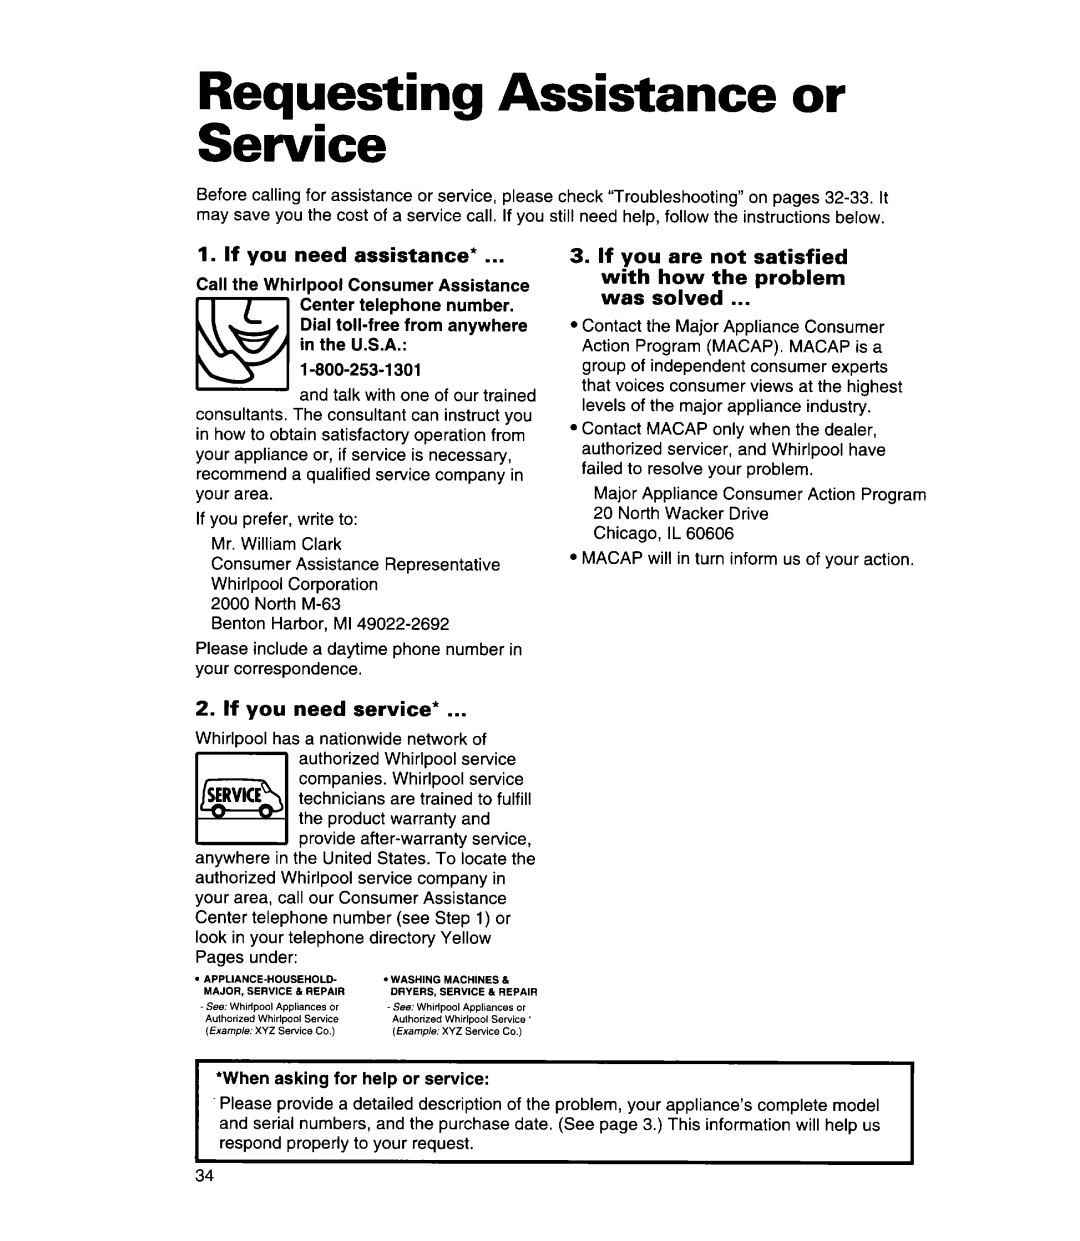 Whirlpool MT7118XD, MT7078XD, MT7116XD Requesting Assistance or Service, If you need assistance, If you need service 